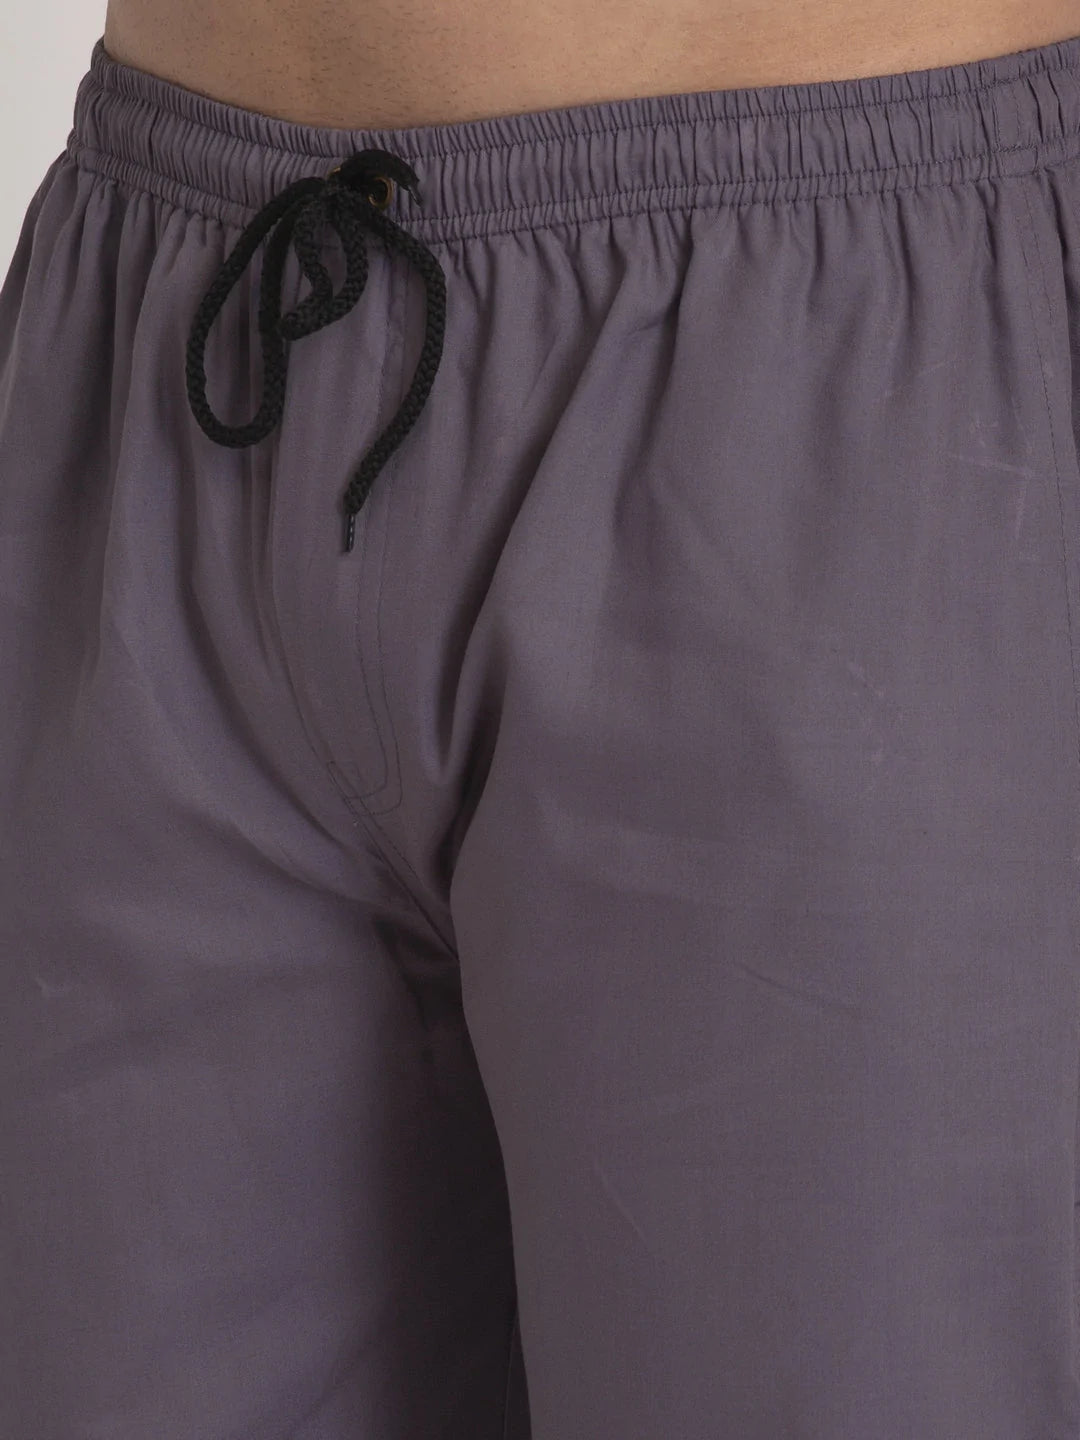 Jainish Men's Grey Solid Cotton Track Pants ( JOG 011Grey )